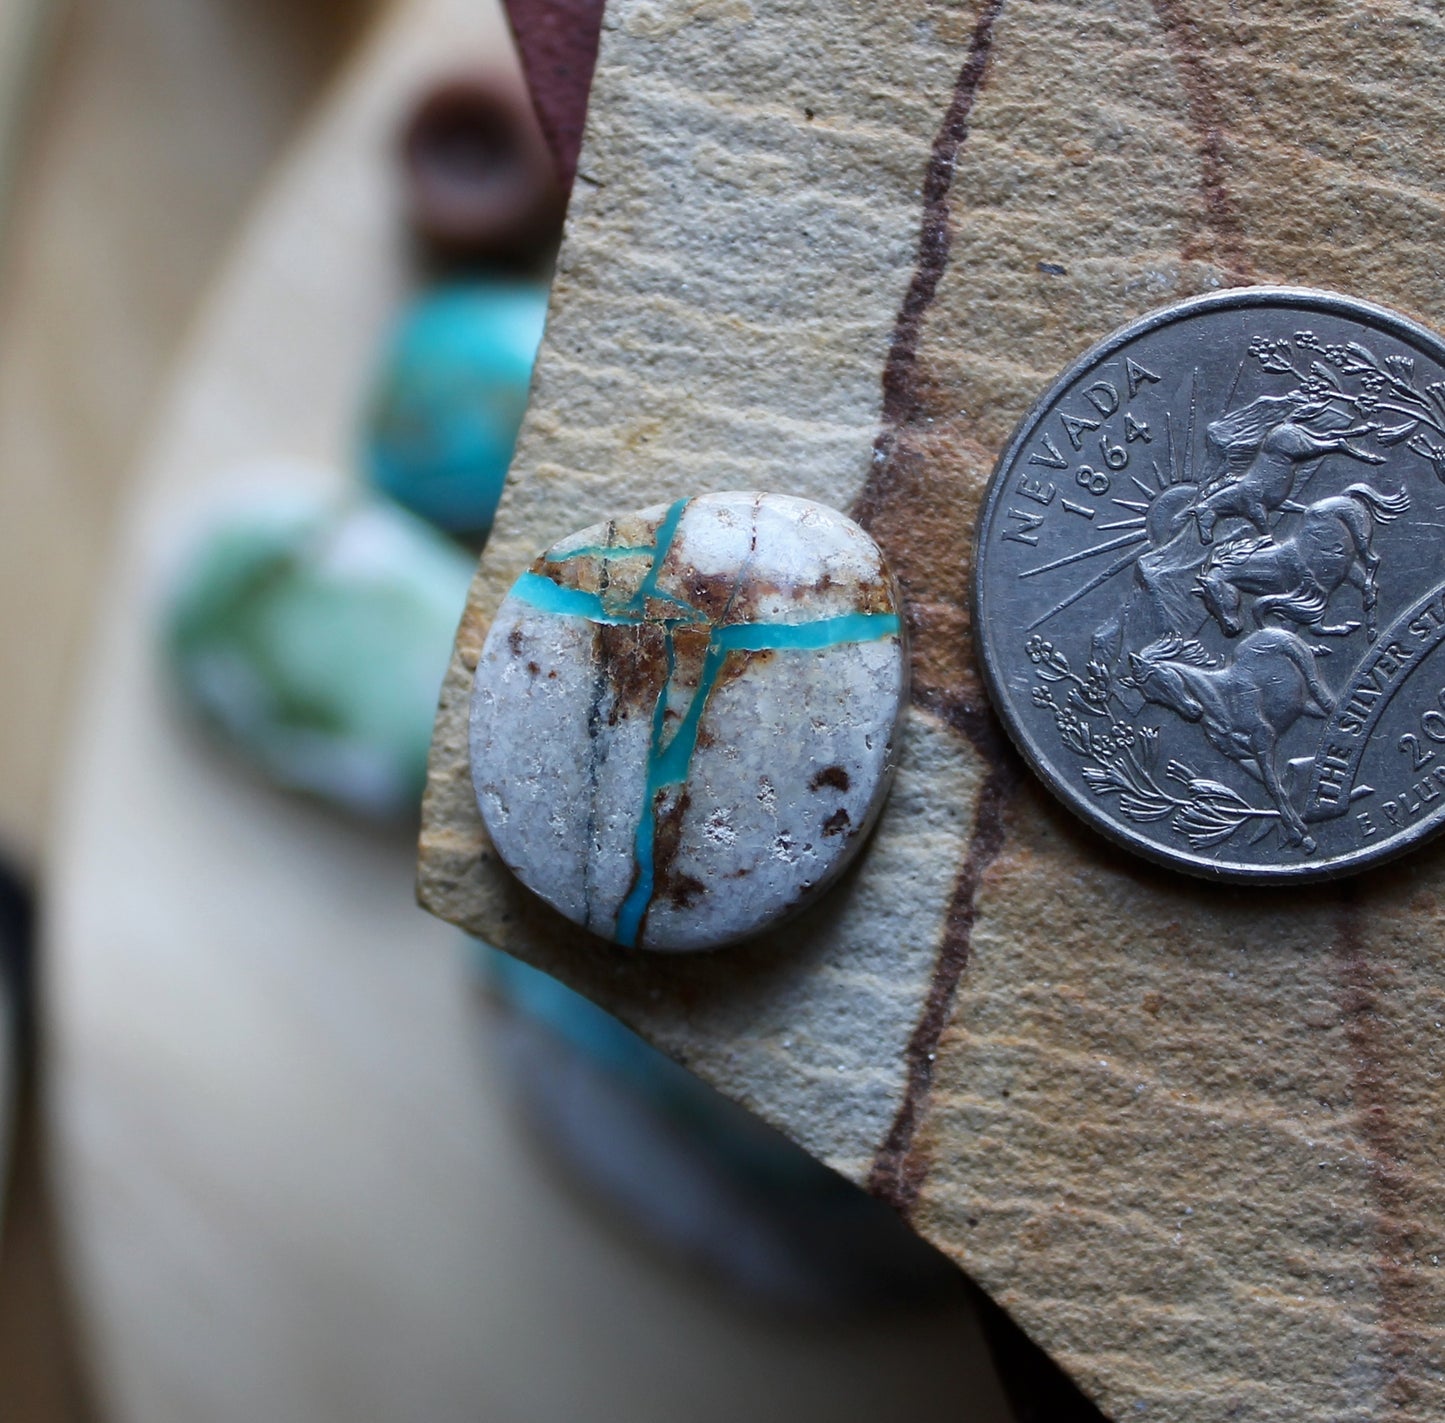 13 carat boulder cut Stone Mountain Turquoise cabochon